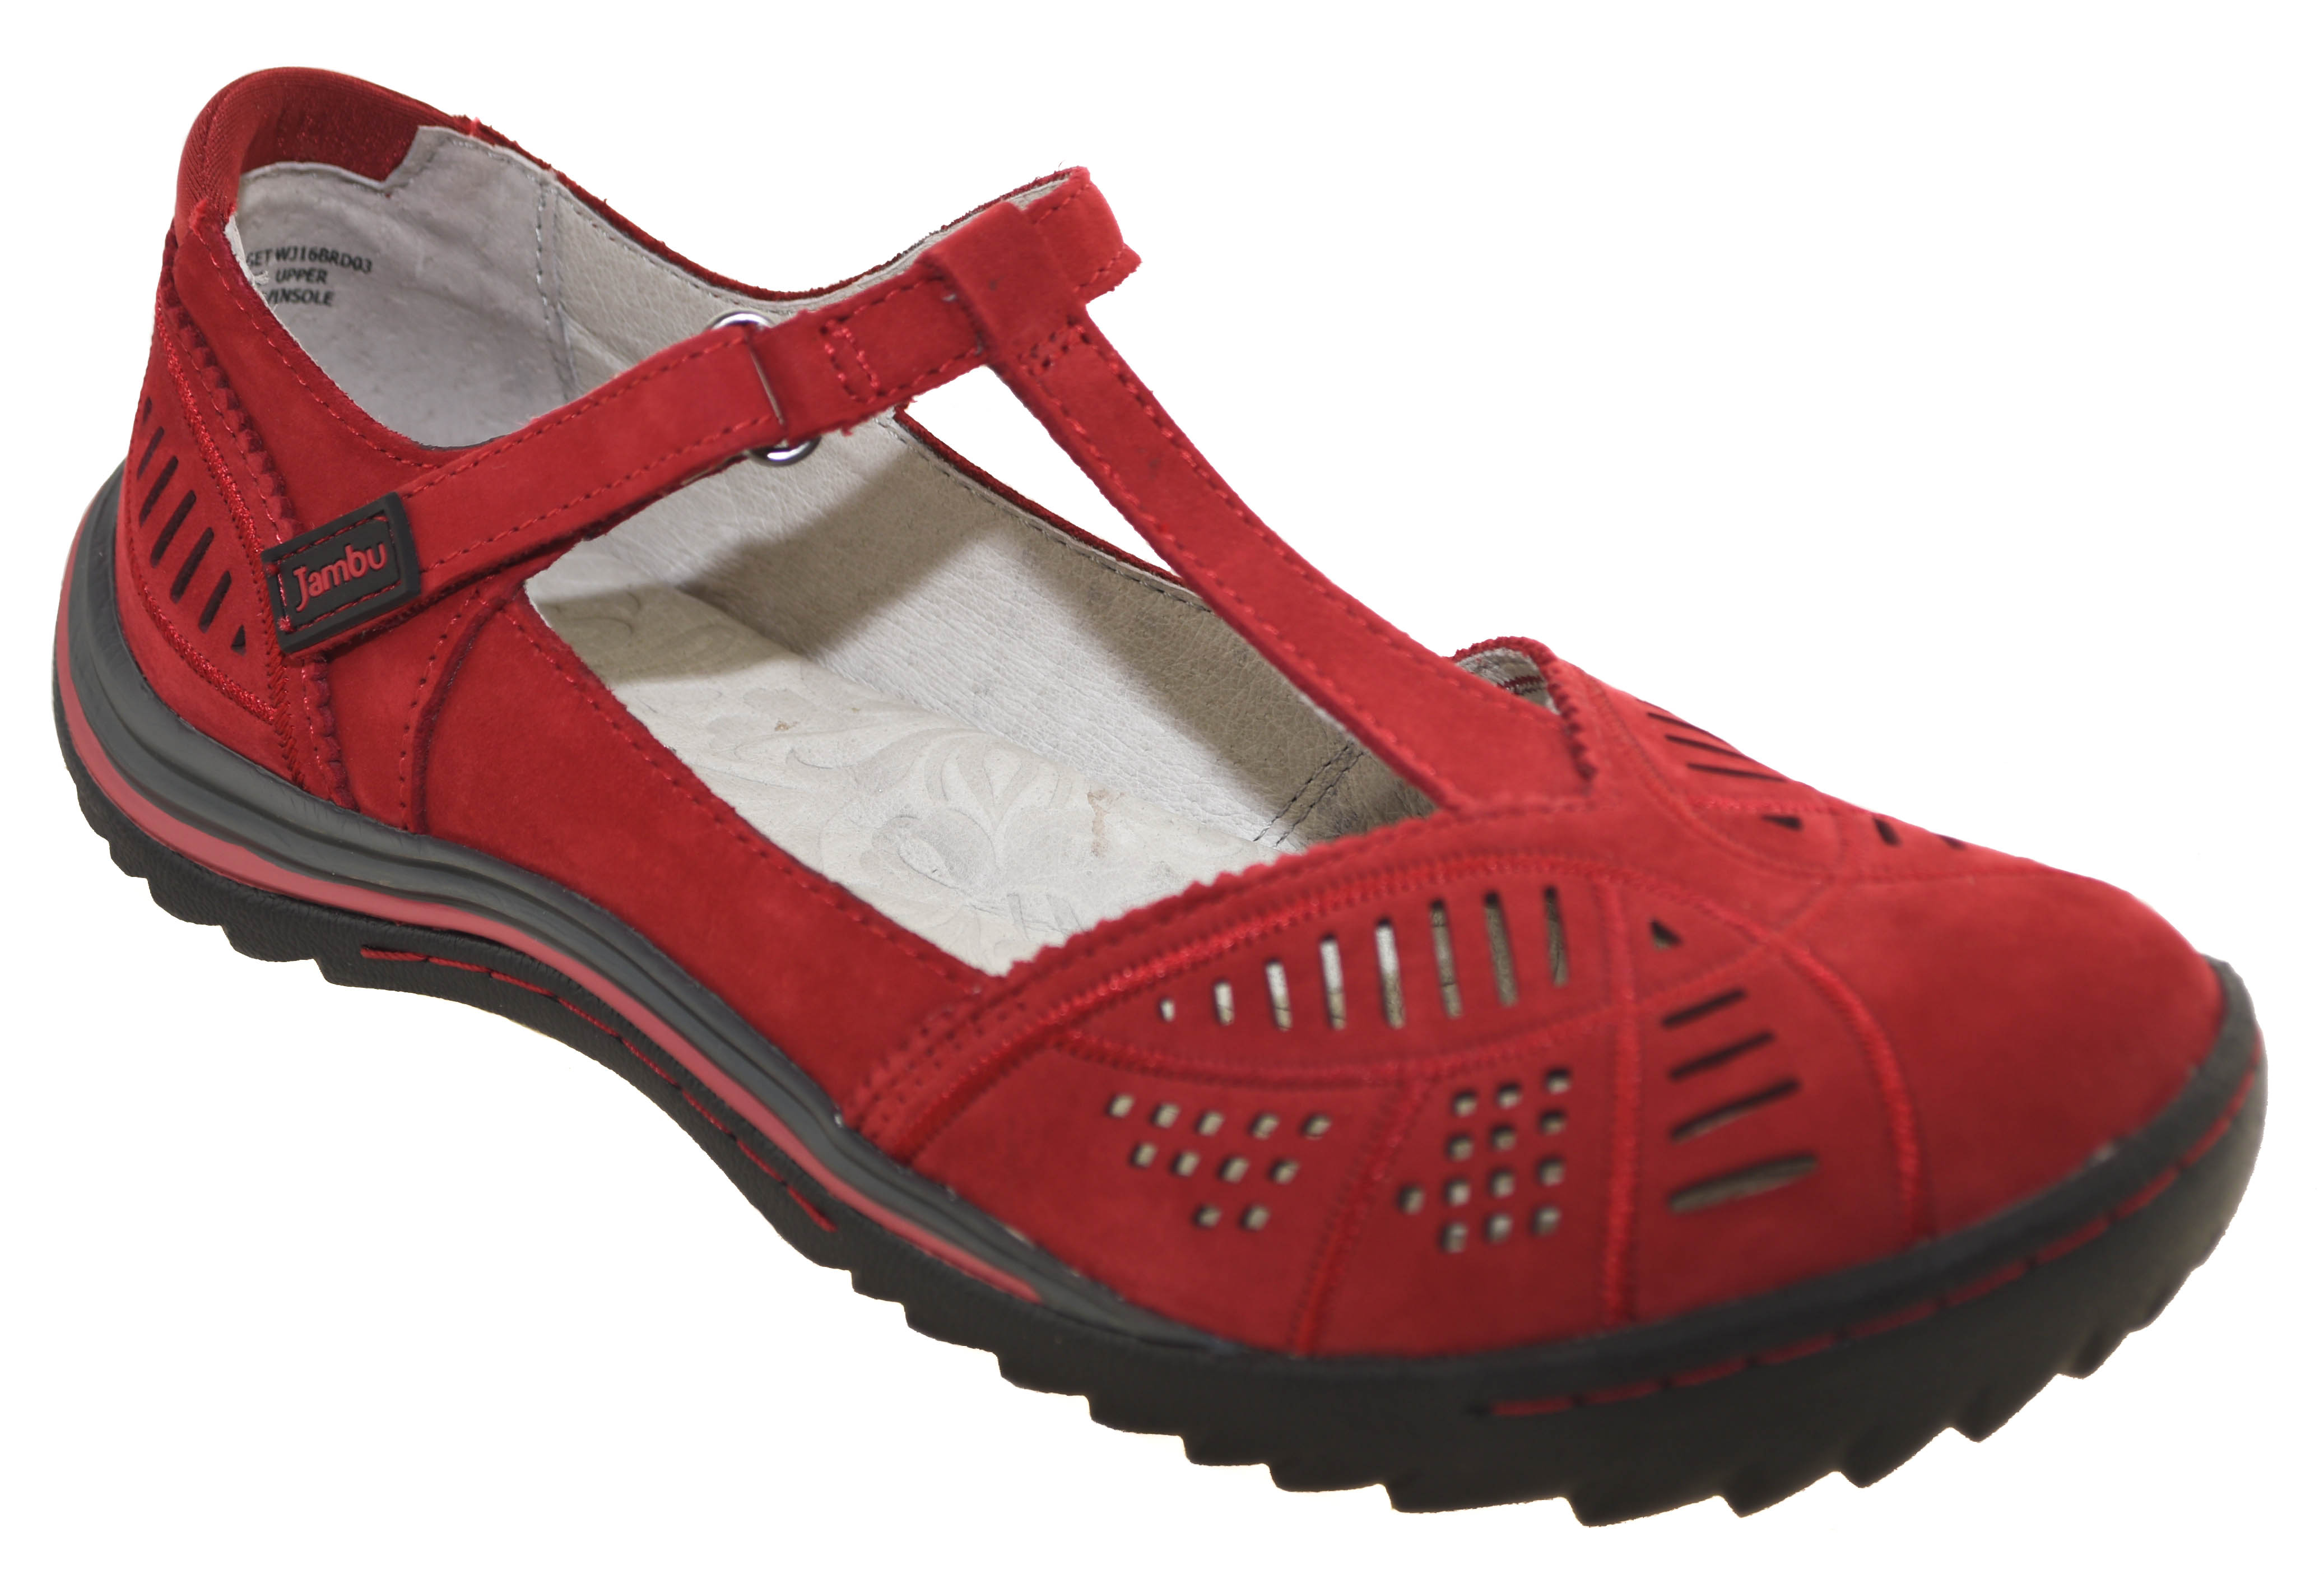 Jambu Women's Bridget Shoes Red | eBay